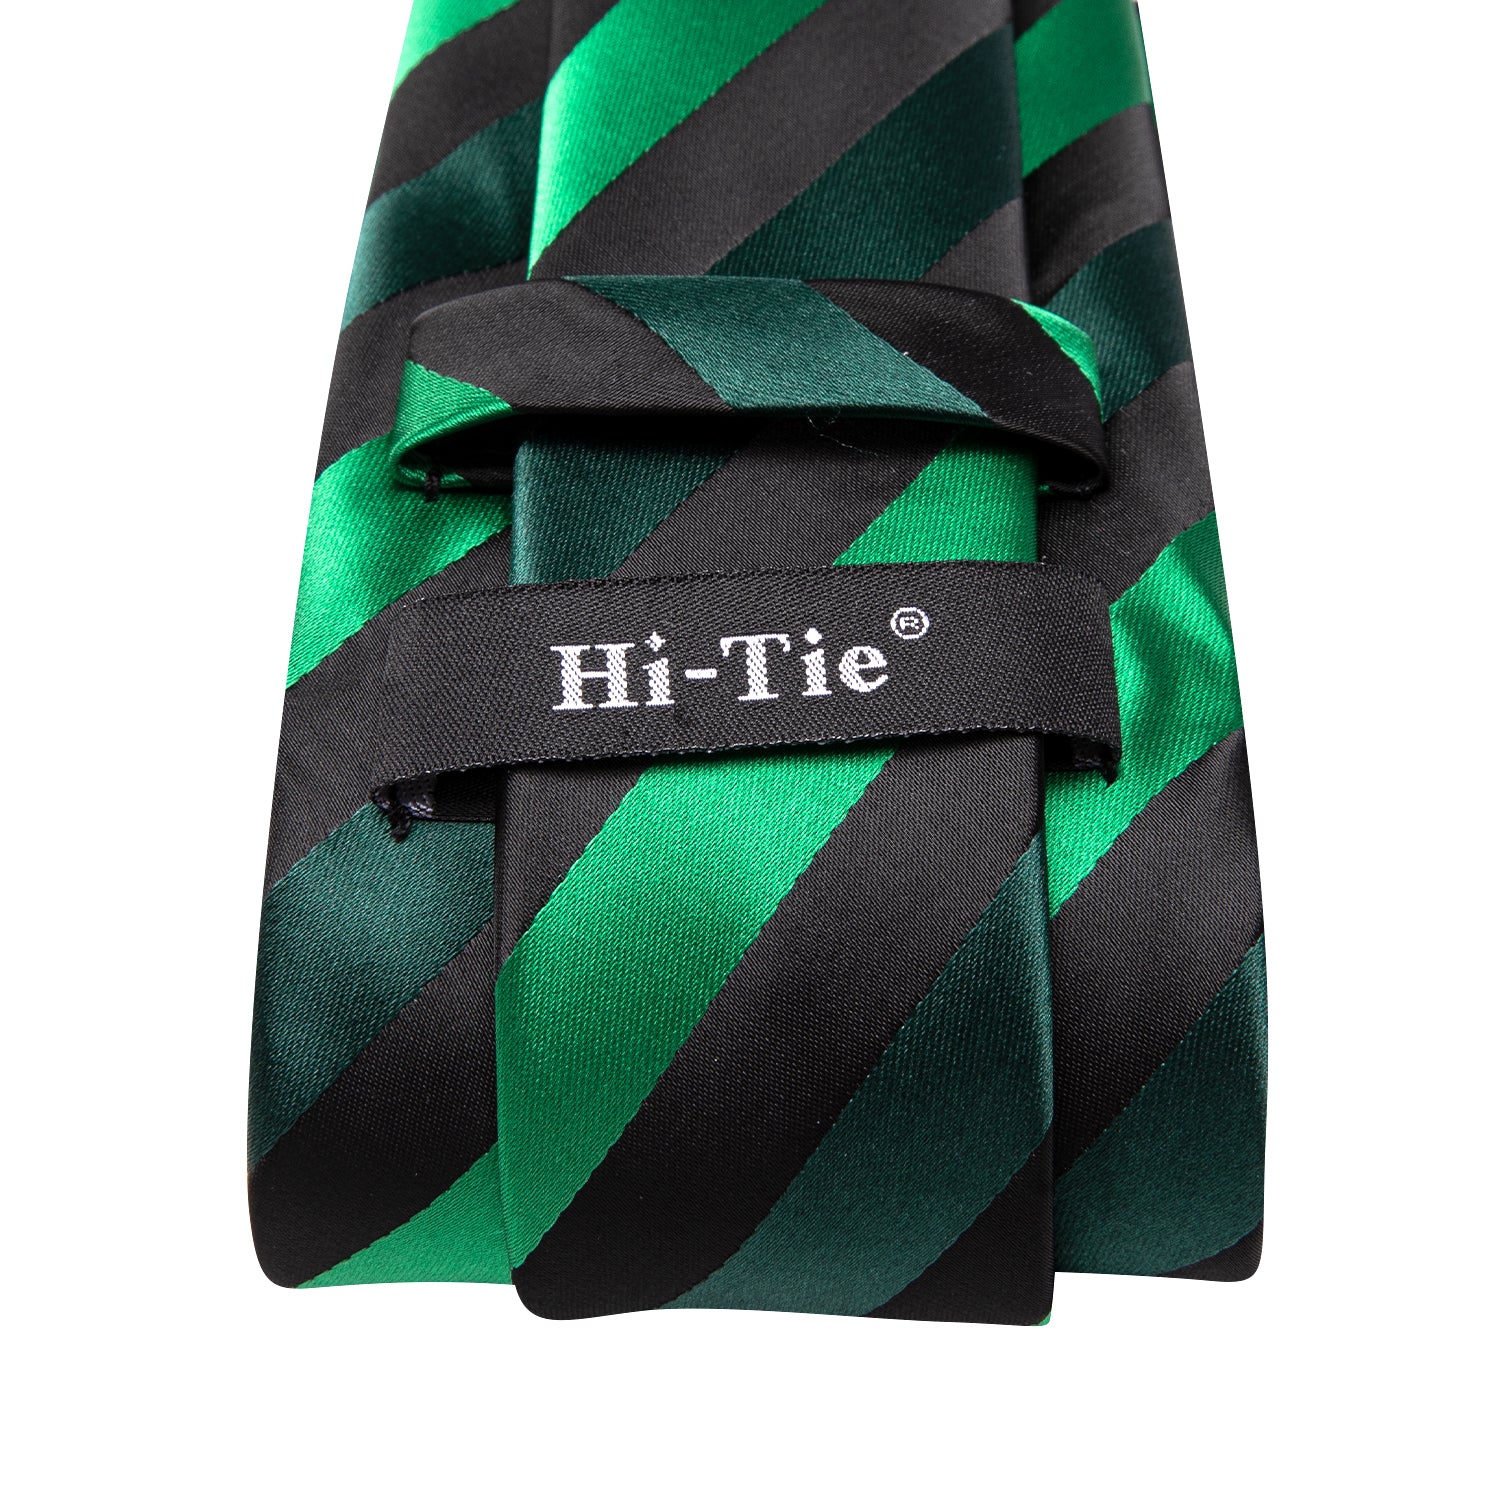 Hi-Tie Bright Green Striped Men's Tie Pocket Square Cufflinks Set